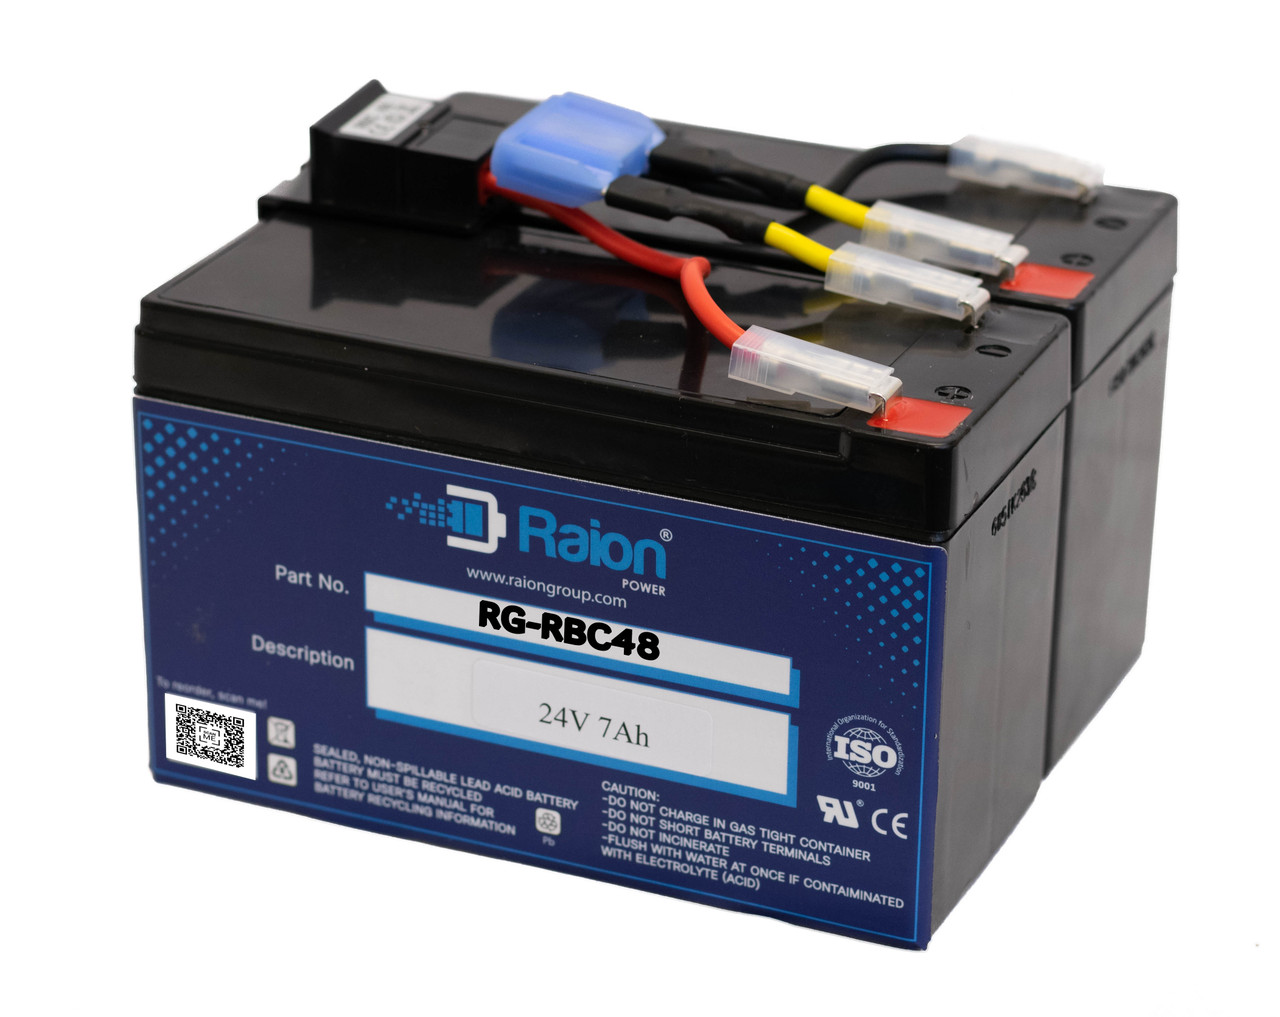 Raion Power RG-RBC48 replacement RBC48 battery cartridge for APC Smart-UPS 750VA SUA750I